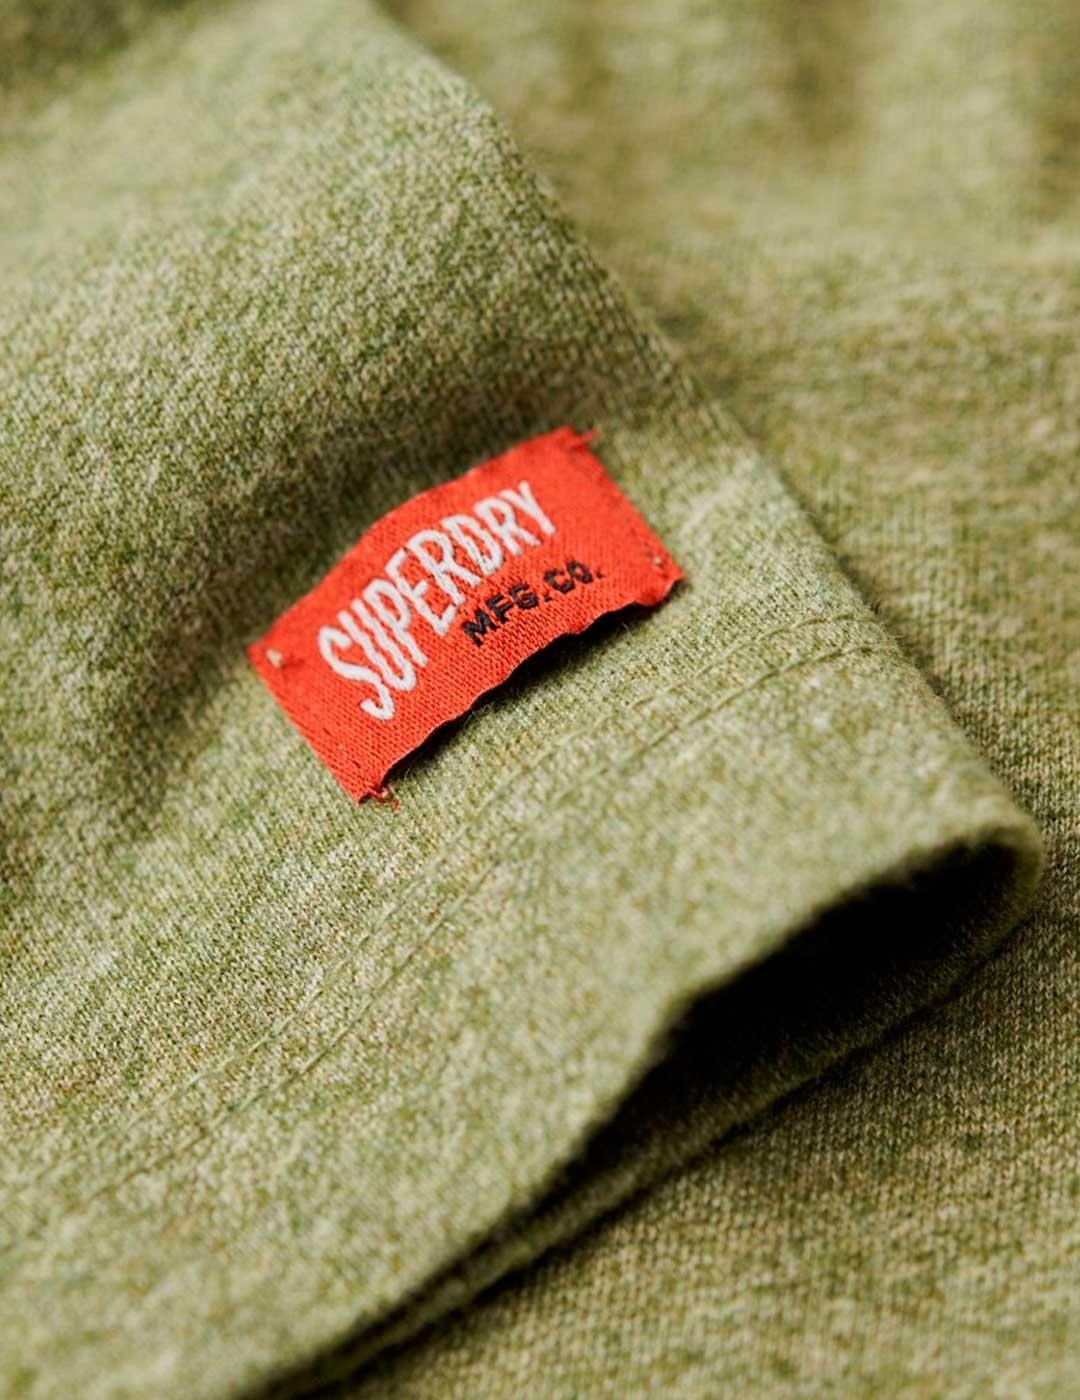 Camiseta Superdry Workwear Trade Graphic verde para hombre